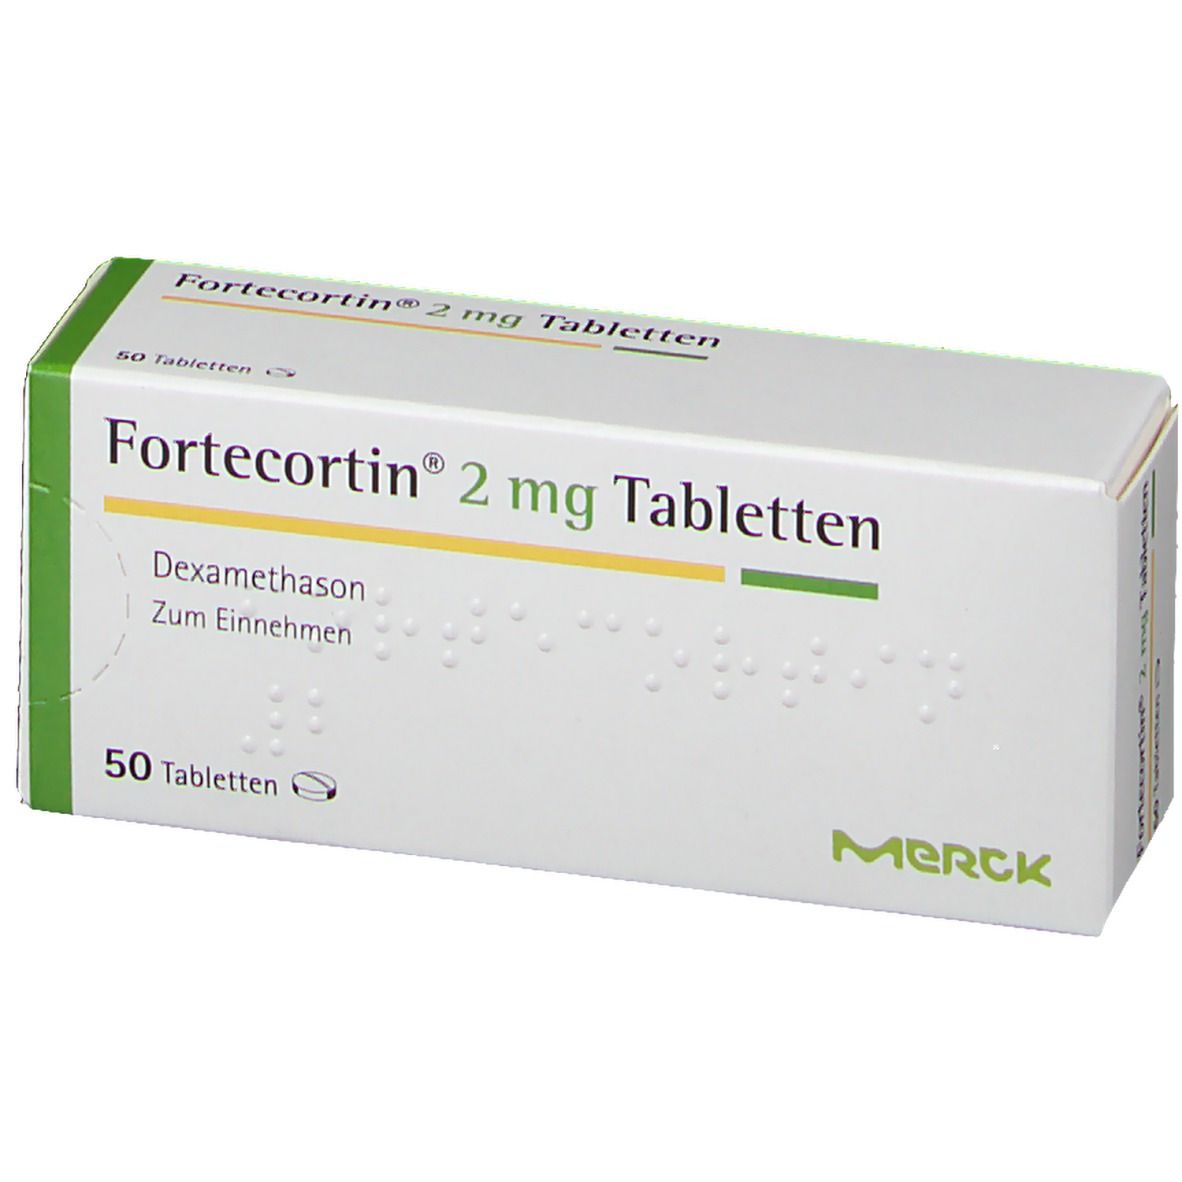 Fortecortin® 2 mg